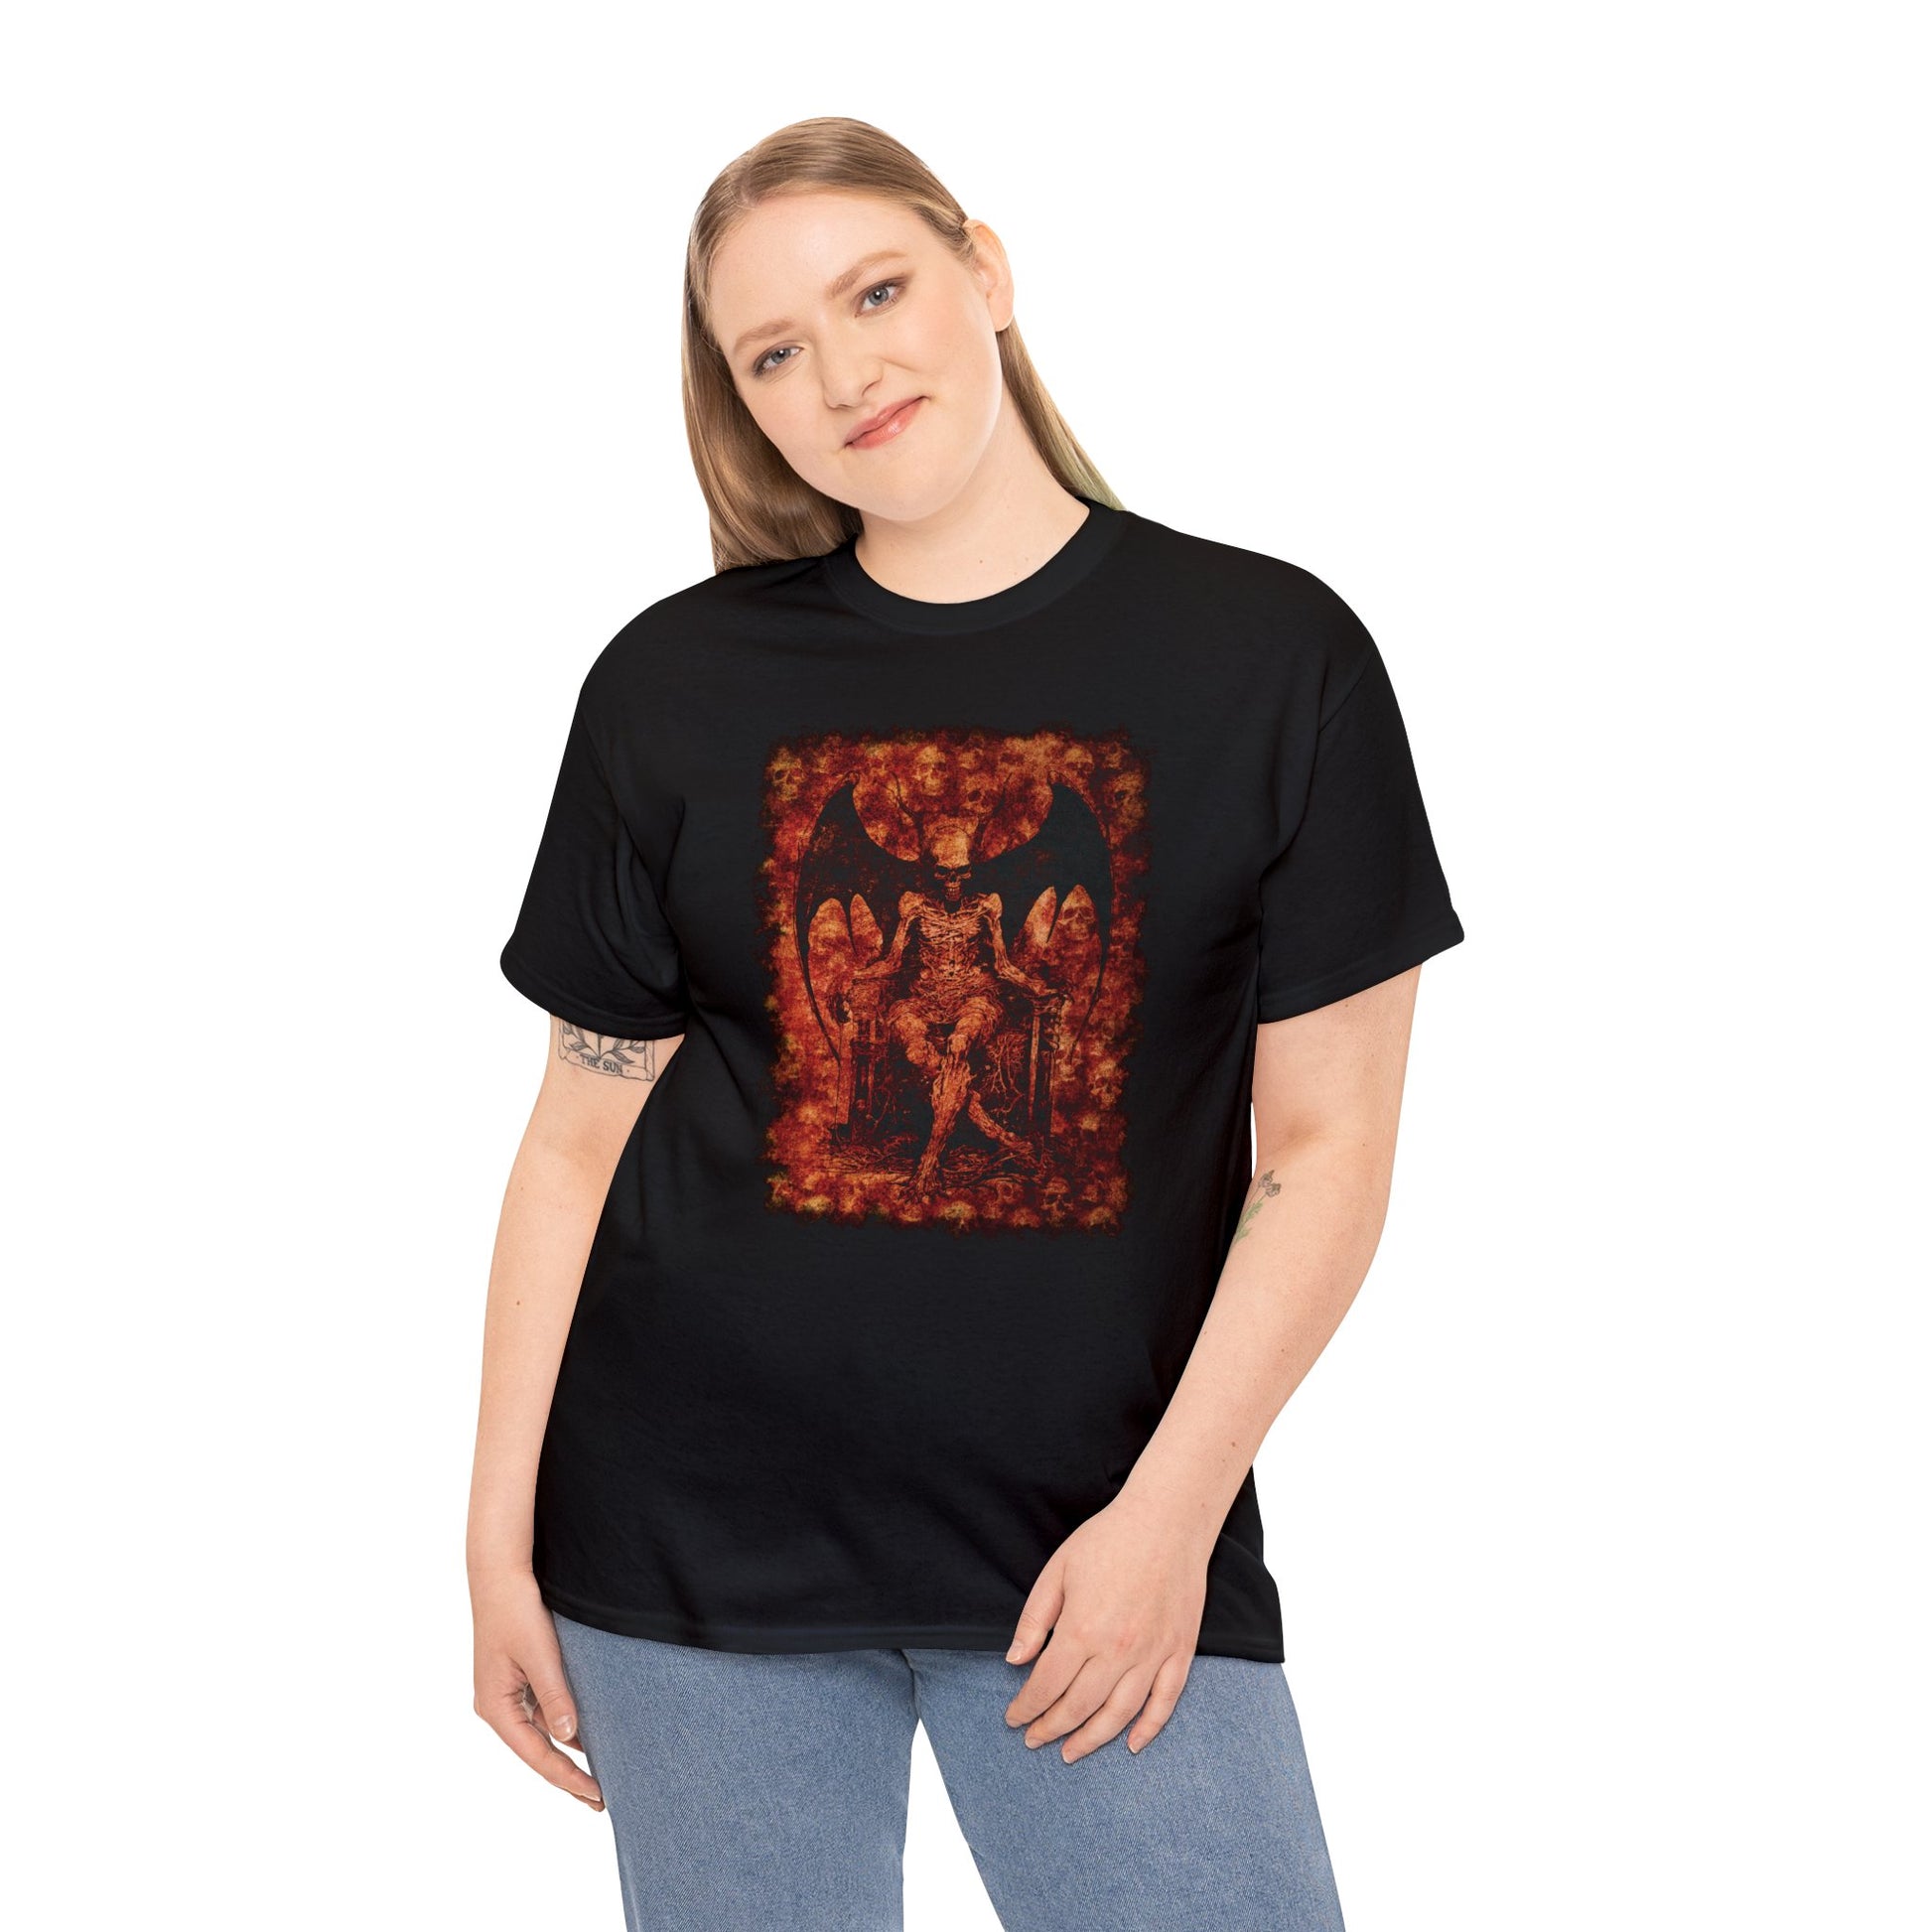 Unisex T-shirt Devil on his Throne in Orange Square - Frogos Design